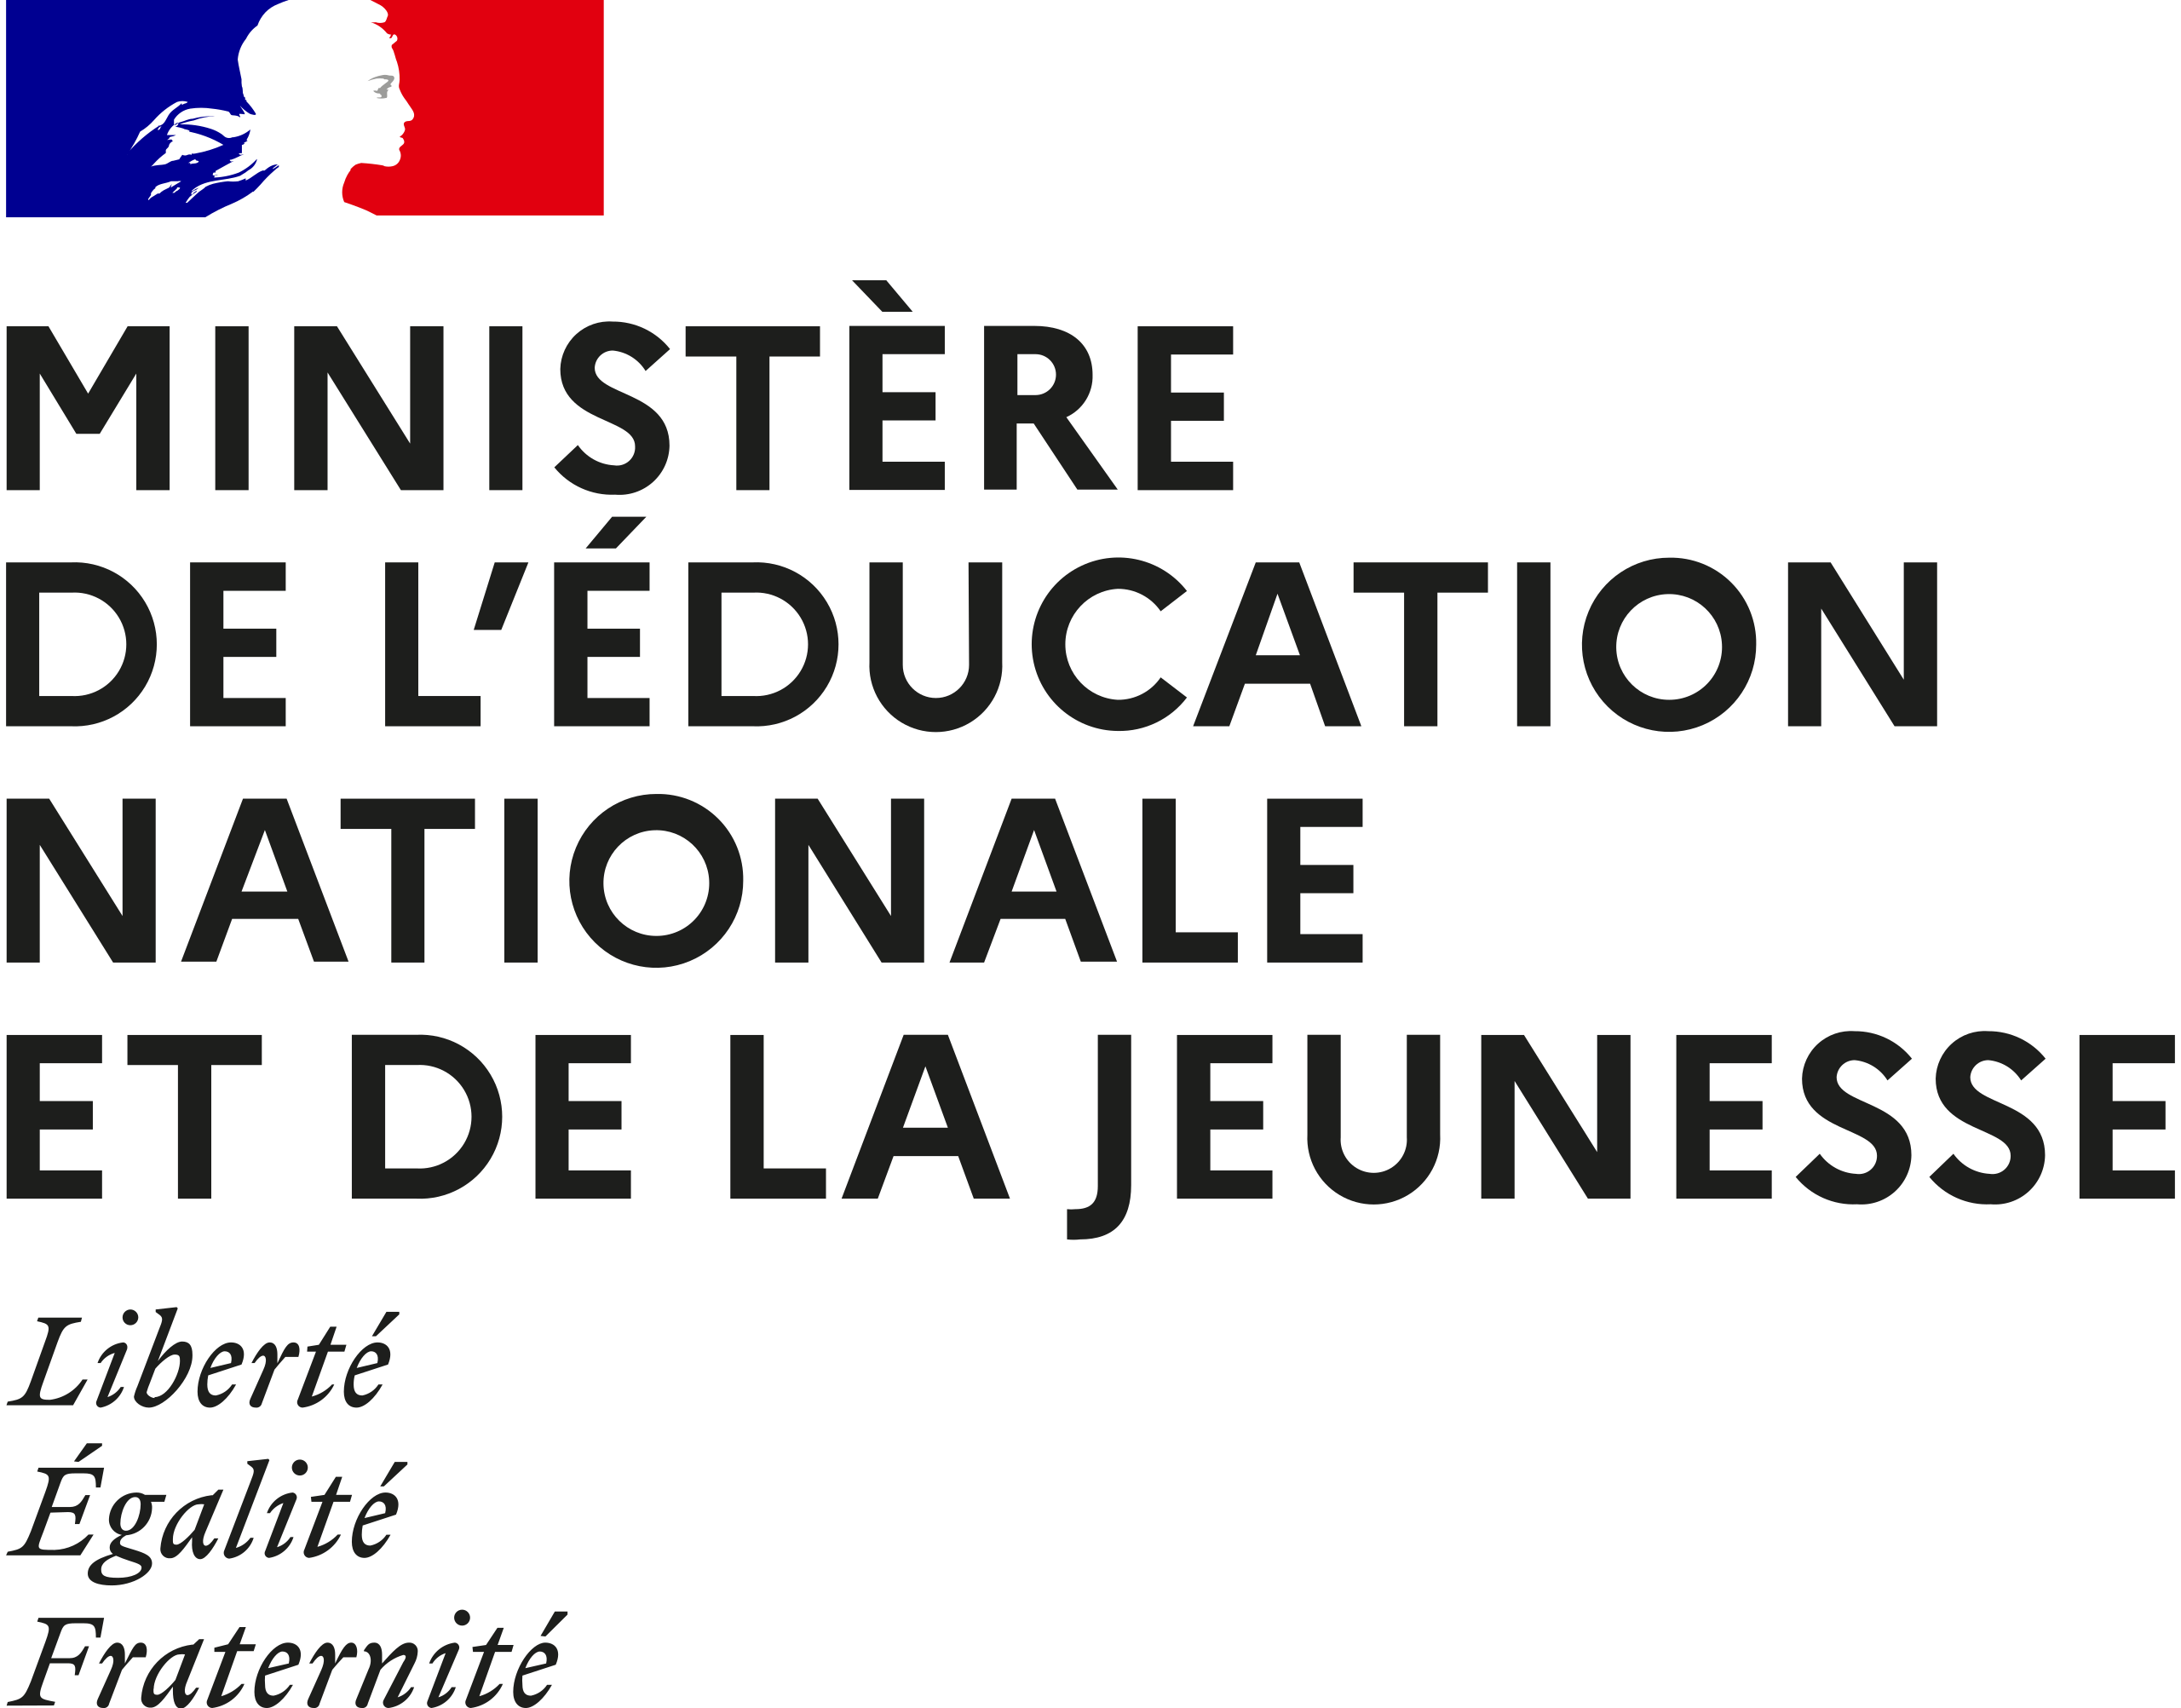 Ministere Educ logo horizontal